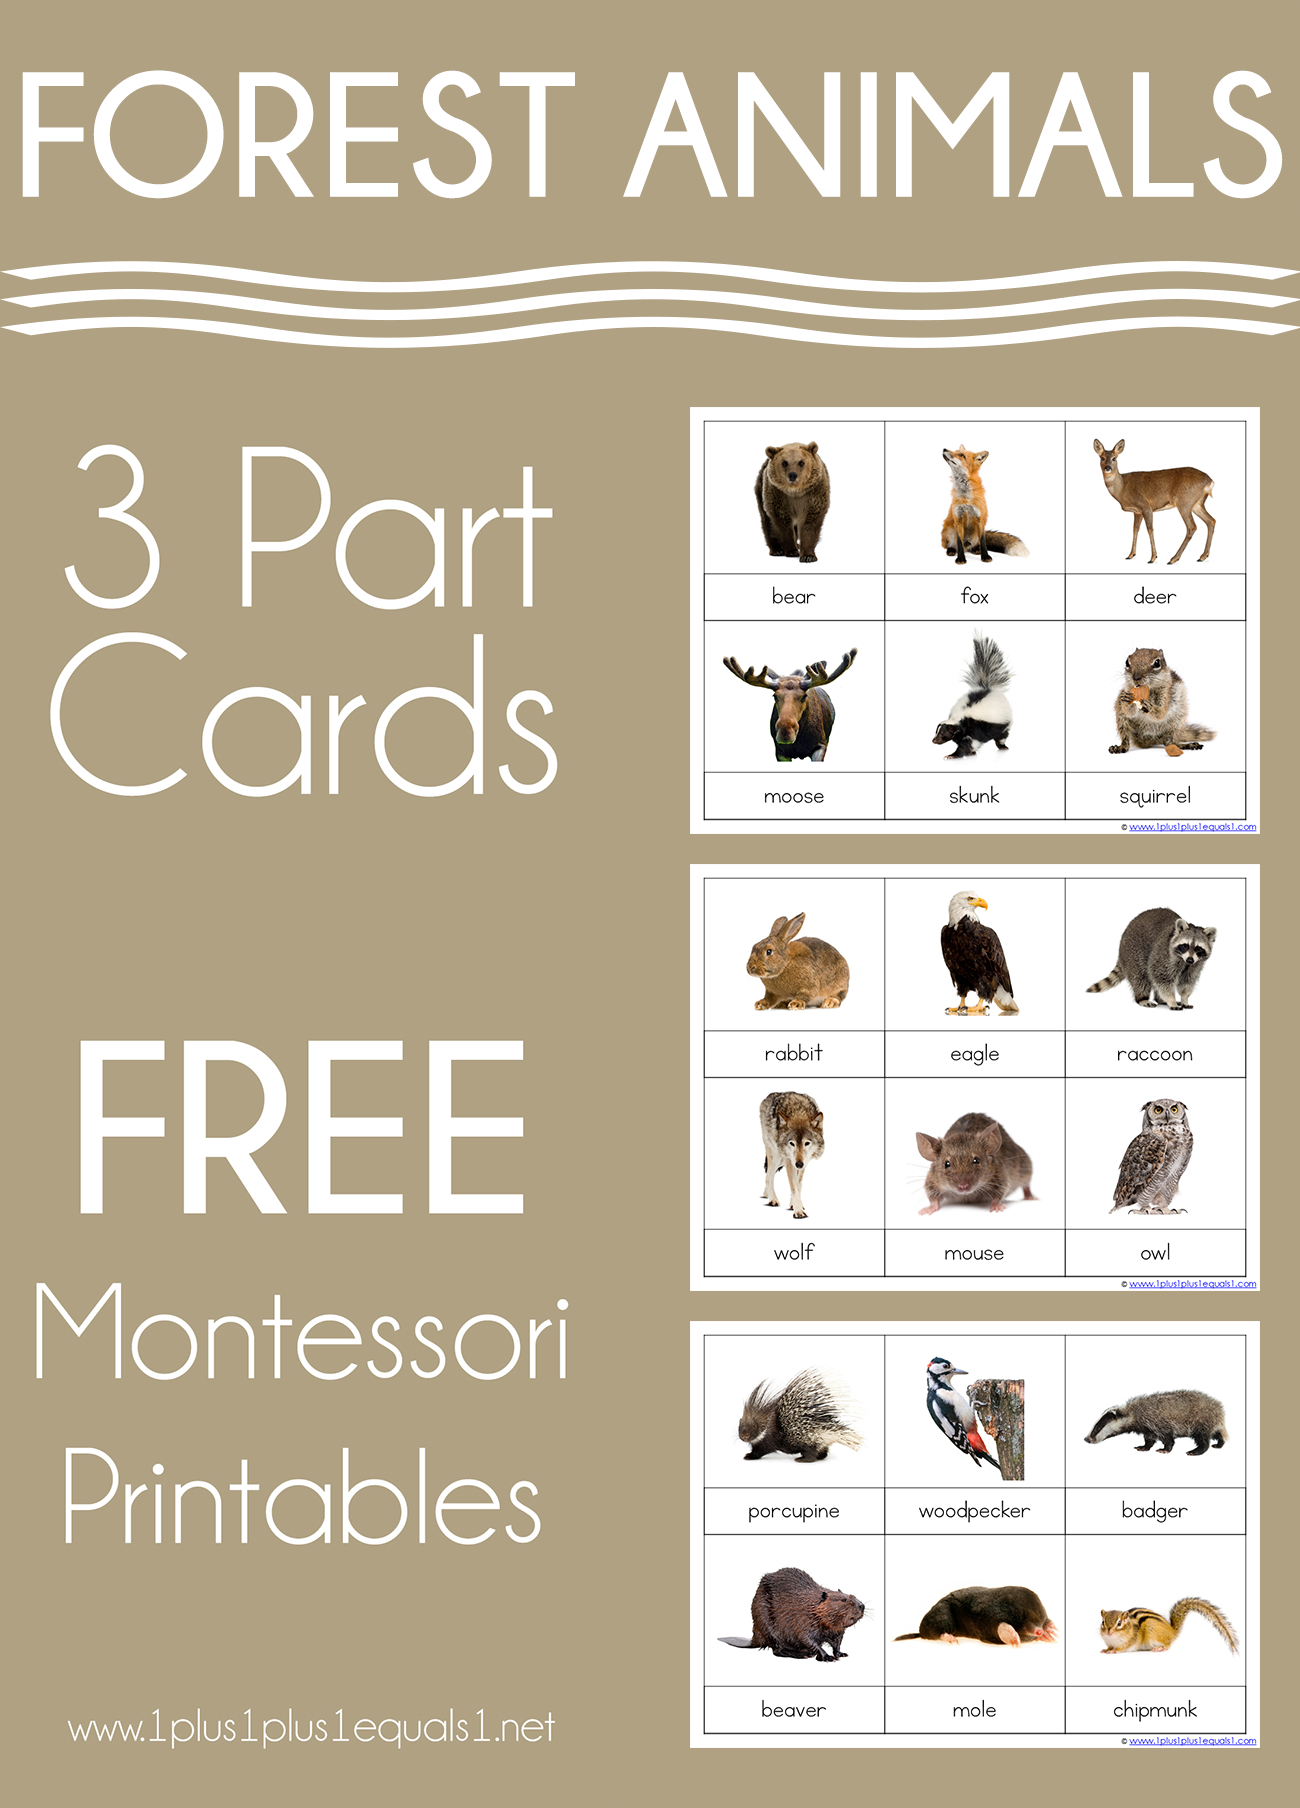 Forest Animals Montessori Printables – Free 3 Part Cards - 1+1+1=1 regarding Free Montessori Printables